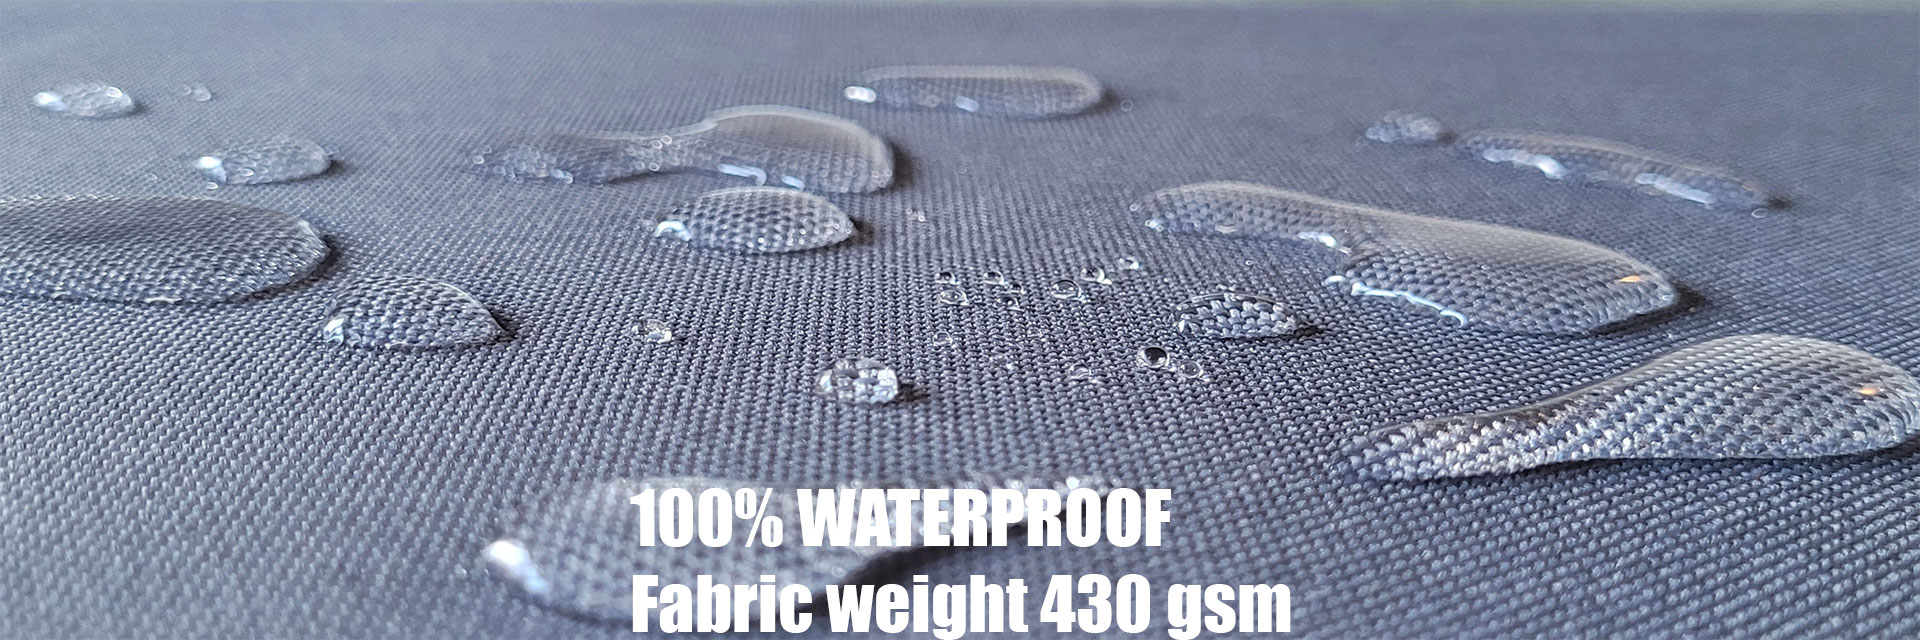 Durable waterproof fabric